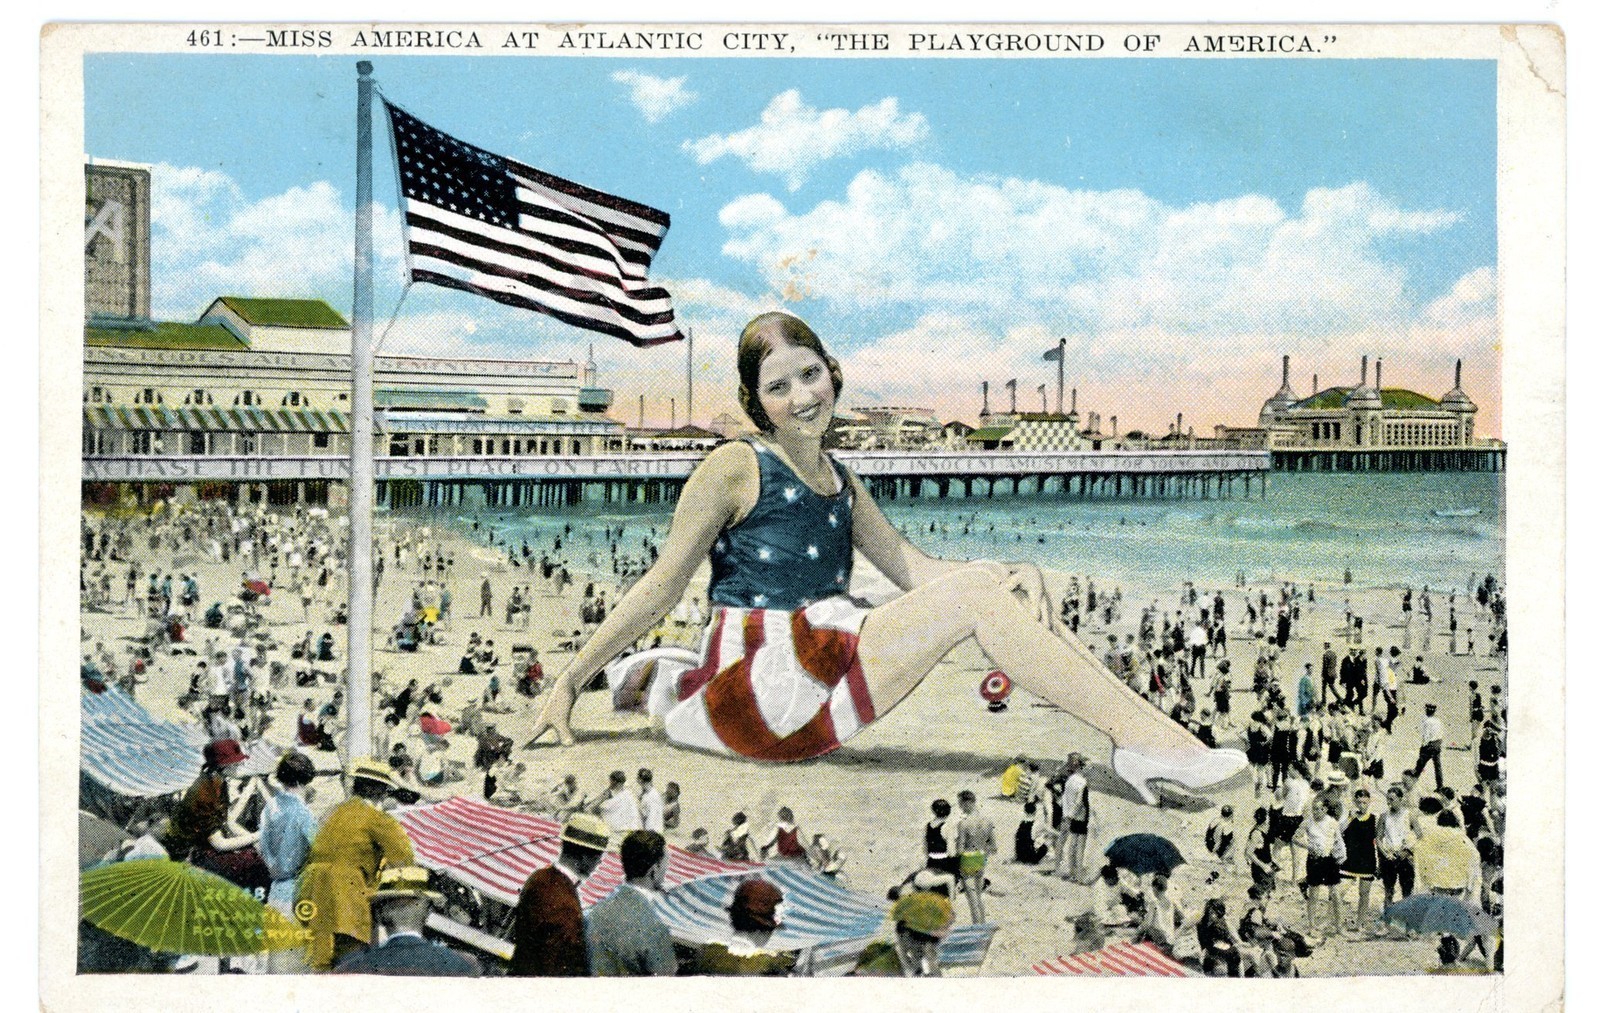 Atlantic City - Miss America at the Playground of America